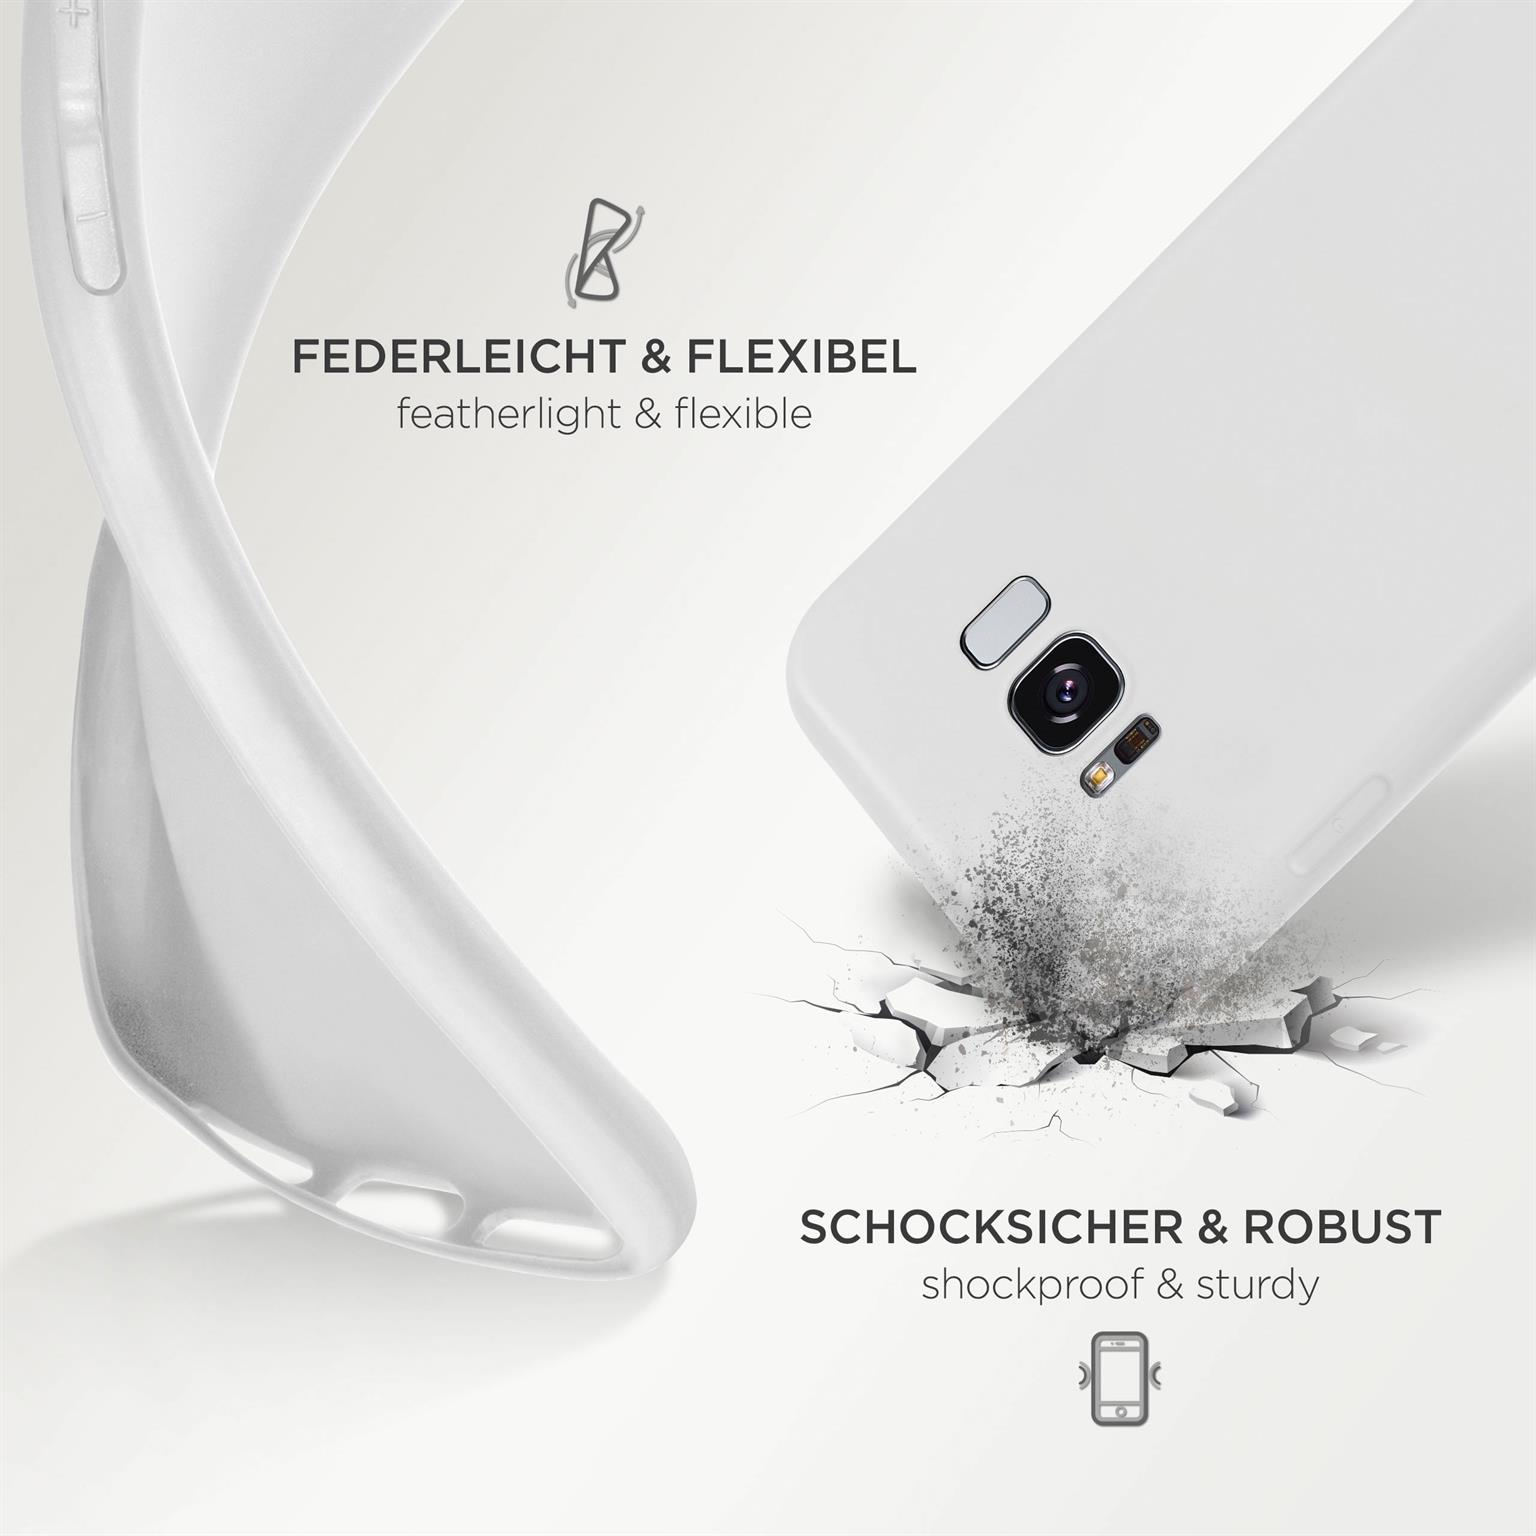 ONEFLOW Backcover, SlimShield Case, Samsung, Pro Galaxy Weiß S8,